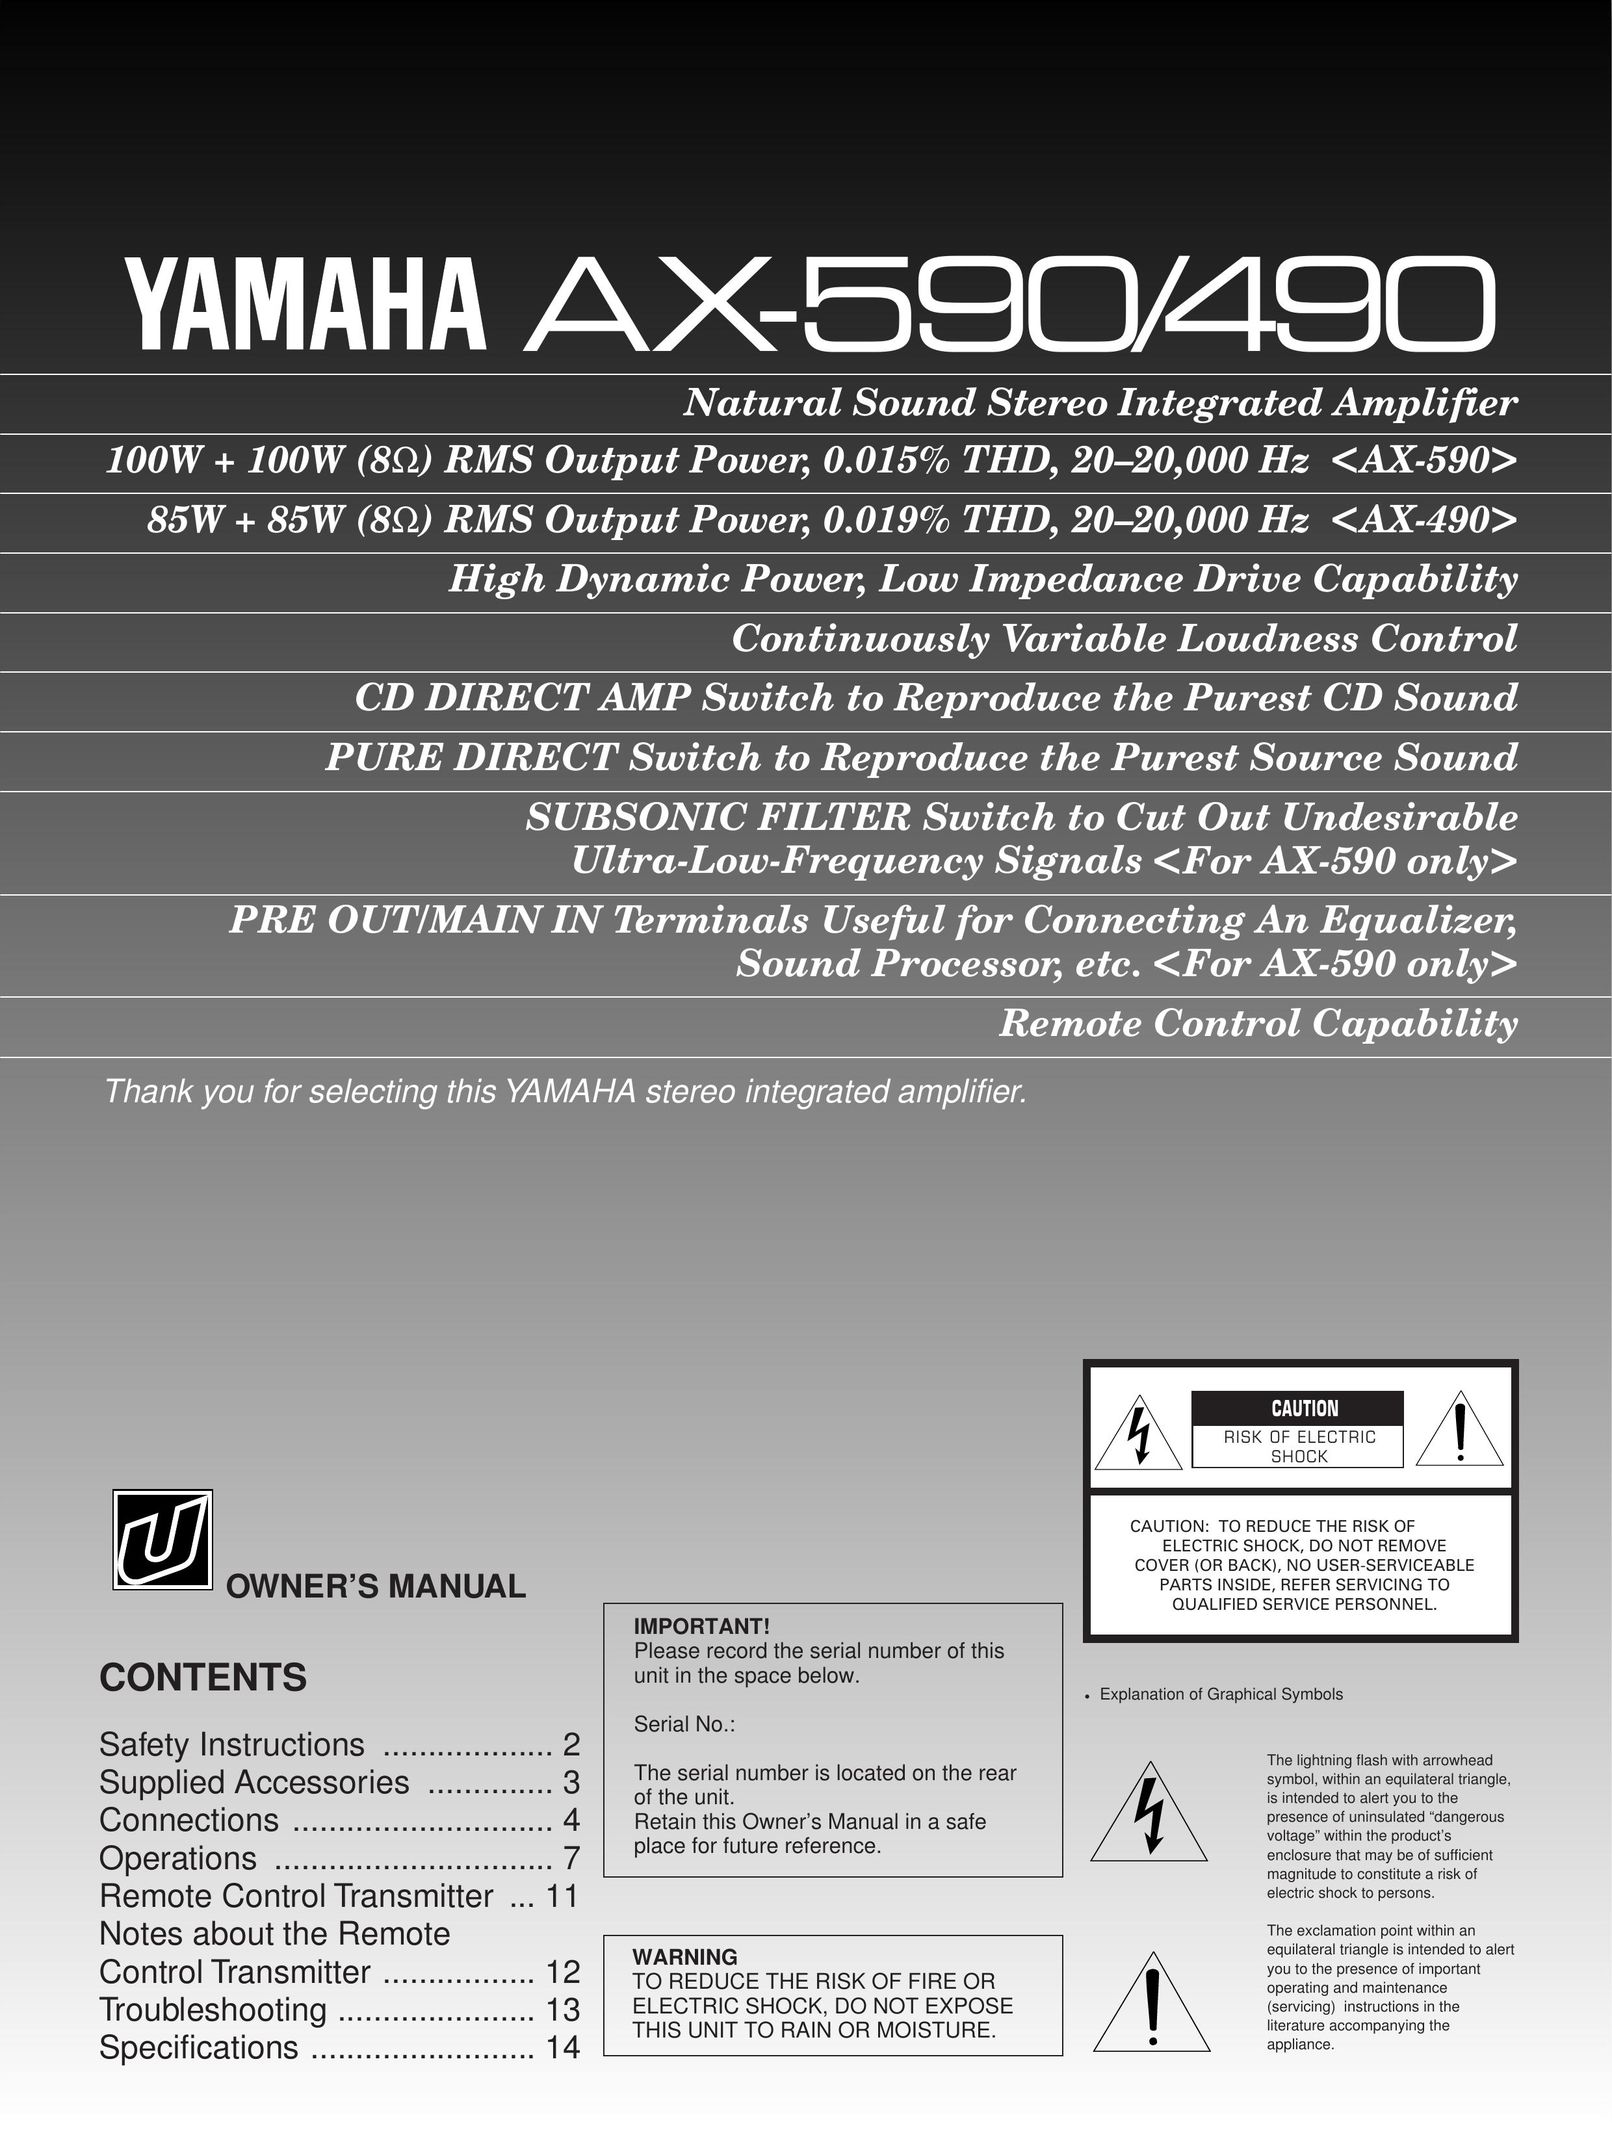 Yamaha AX-490 Stereo Amplifier User Manual